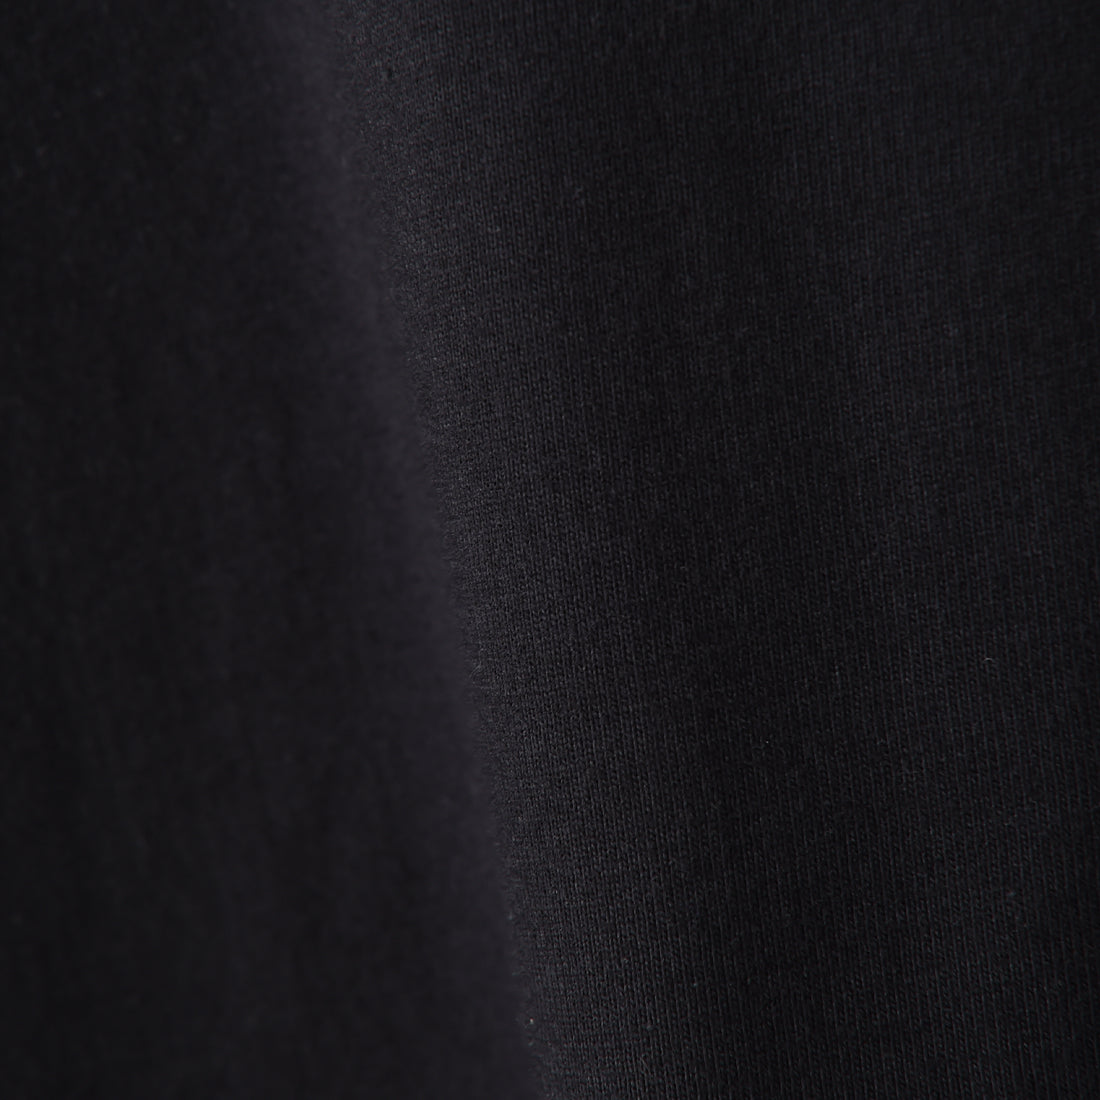 【1.050°C】Logo Tee Shirts(ブラック)